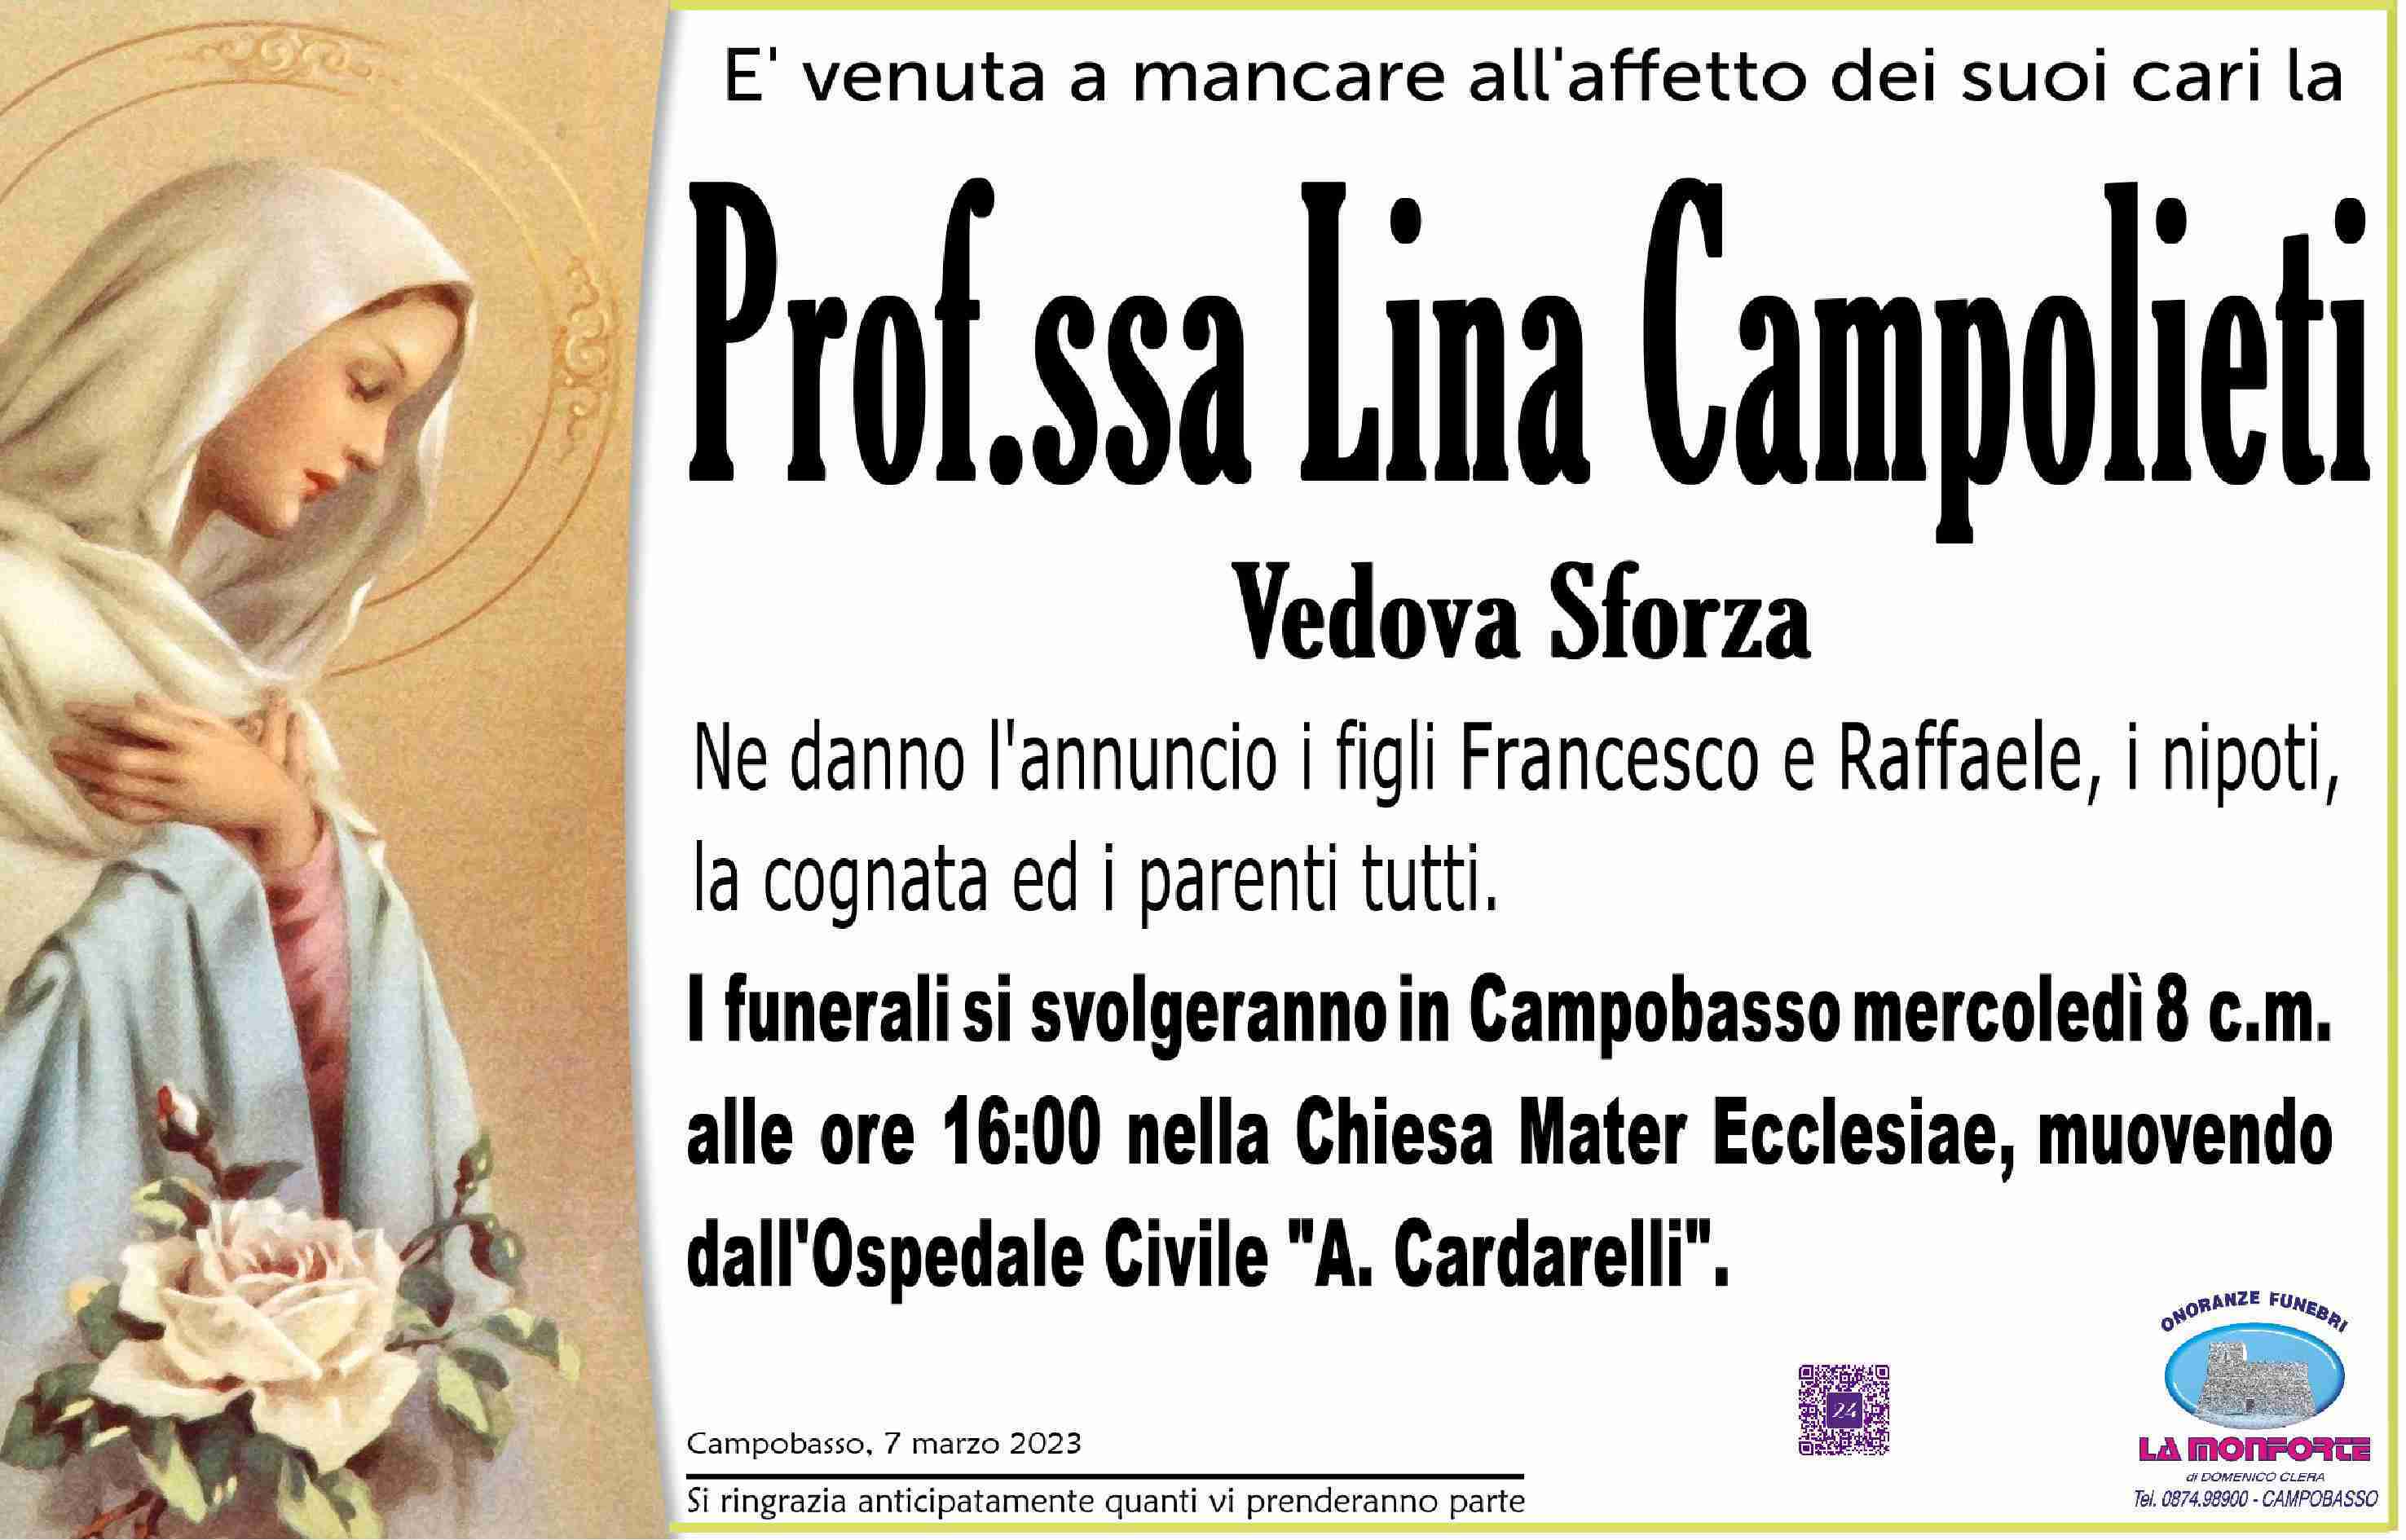 Lina Campolieti